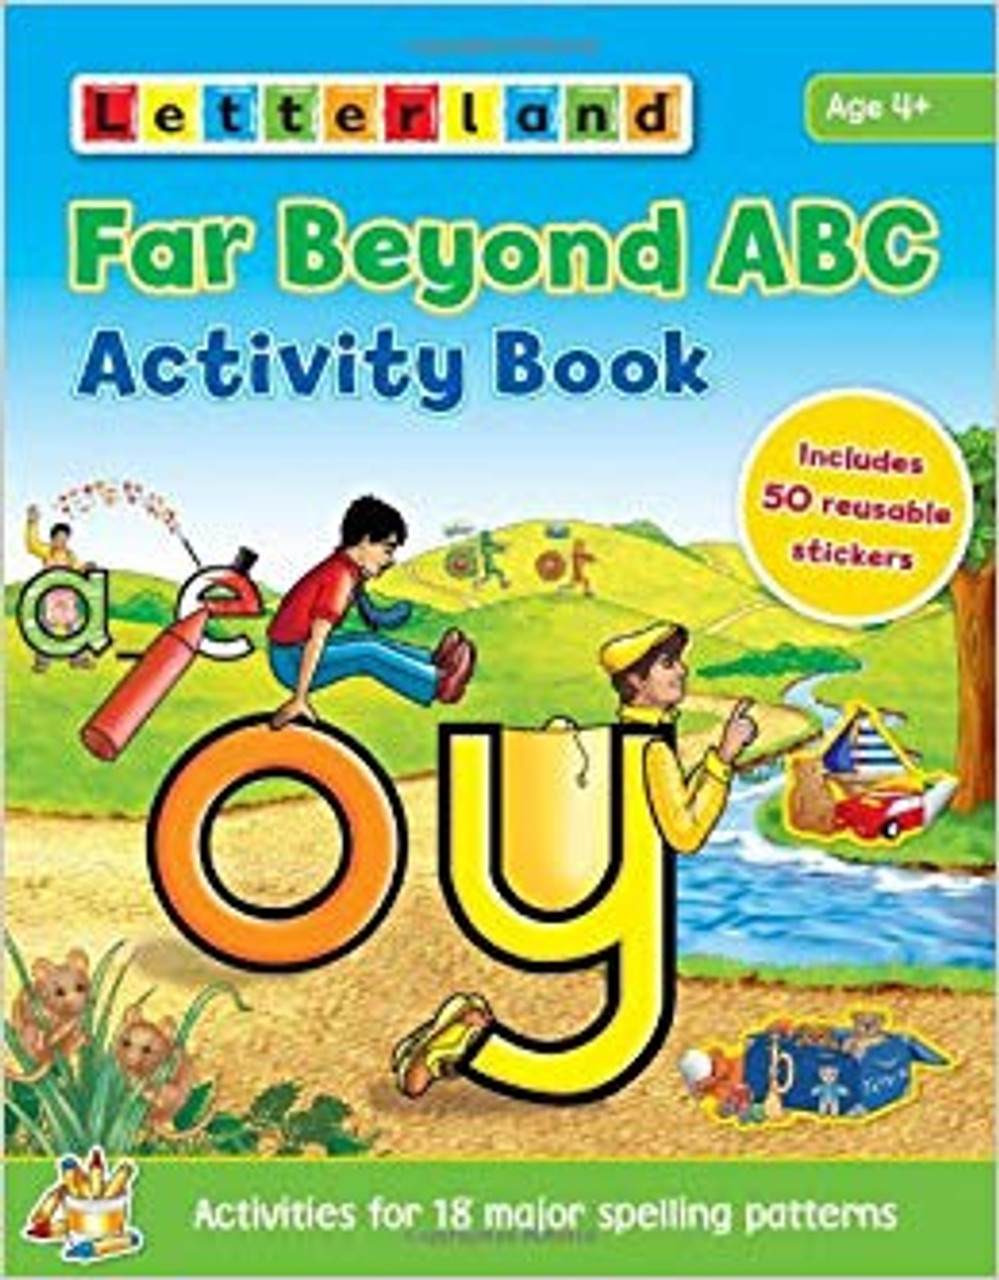 FAR BEYOND ABC ACTIVITY BOOK